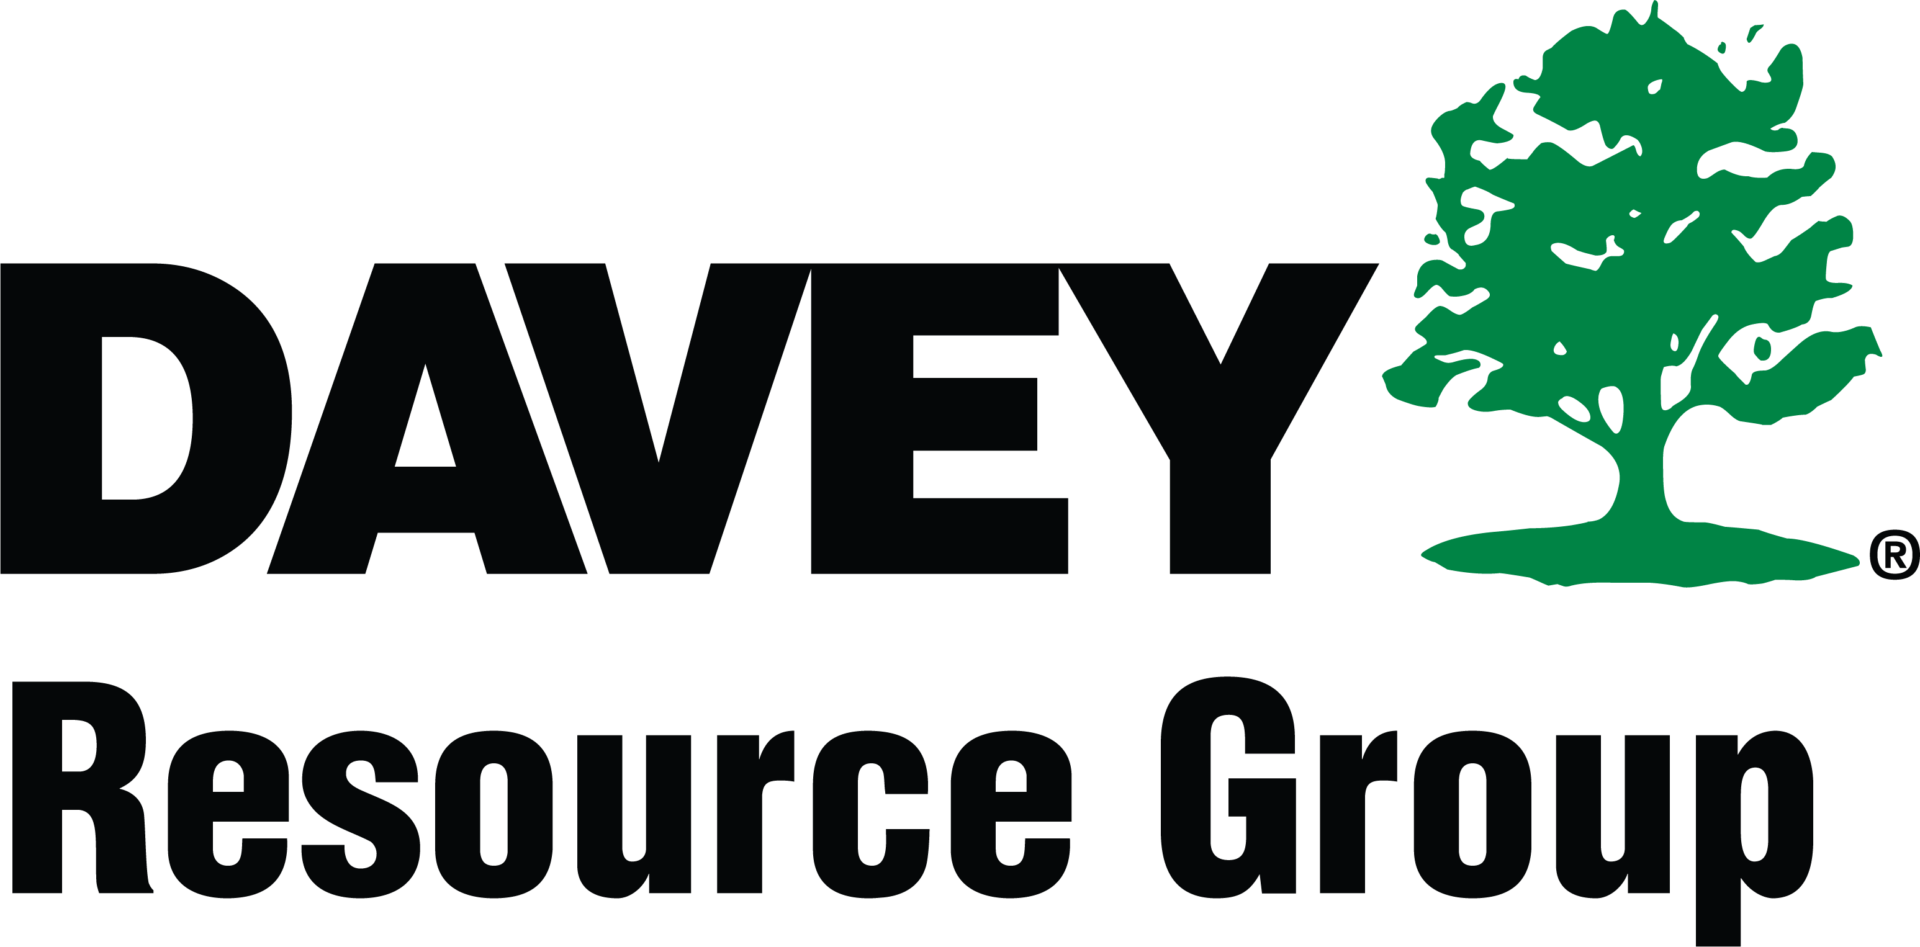 Davey Resource Group, Inc.